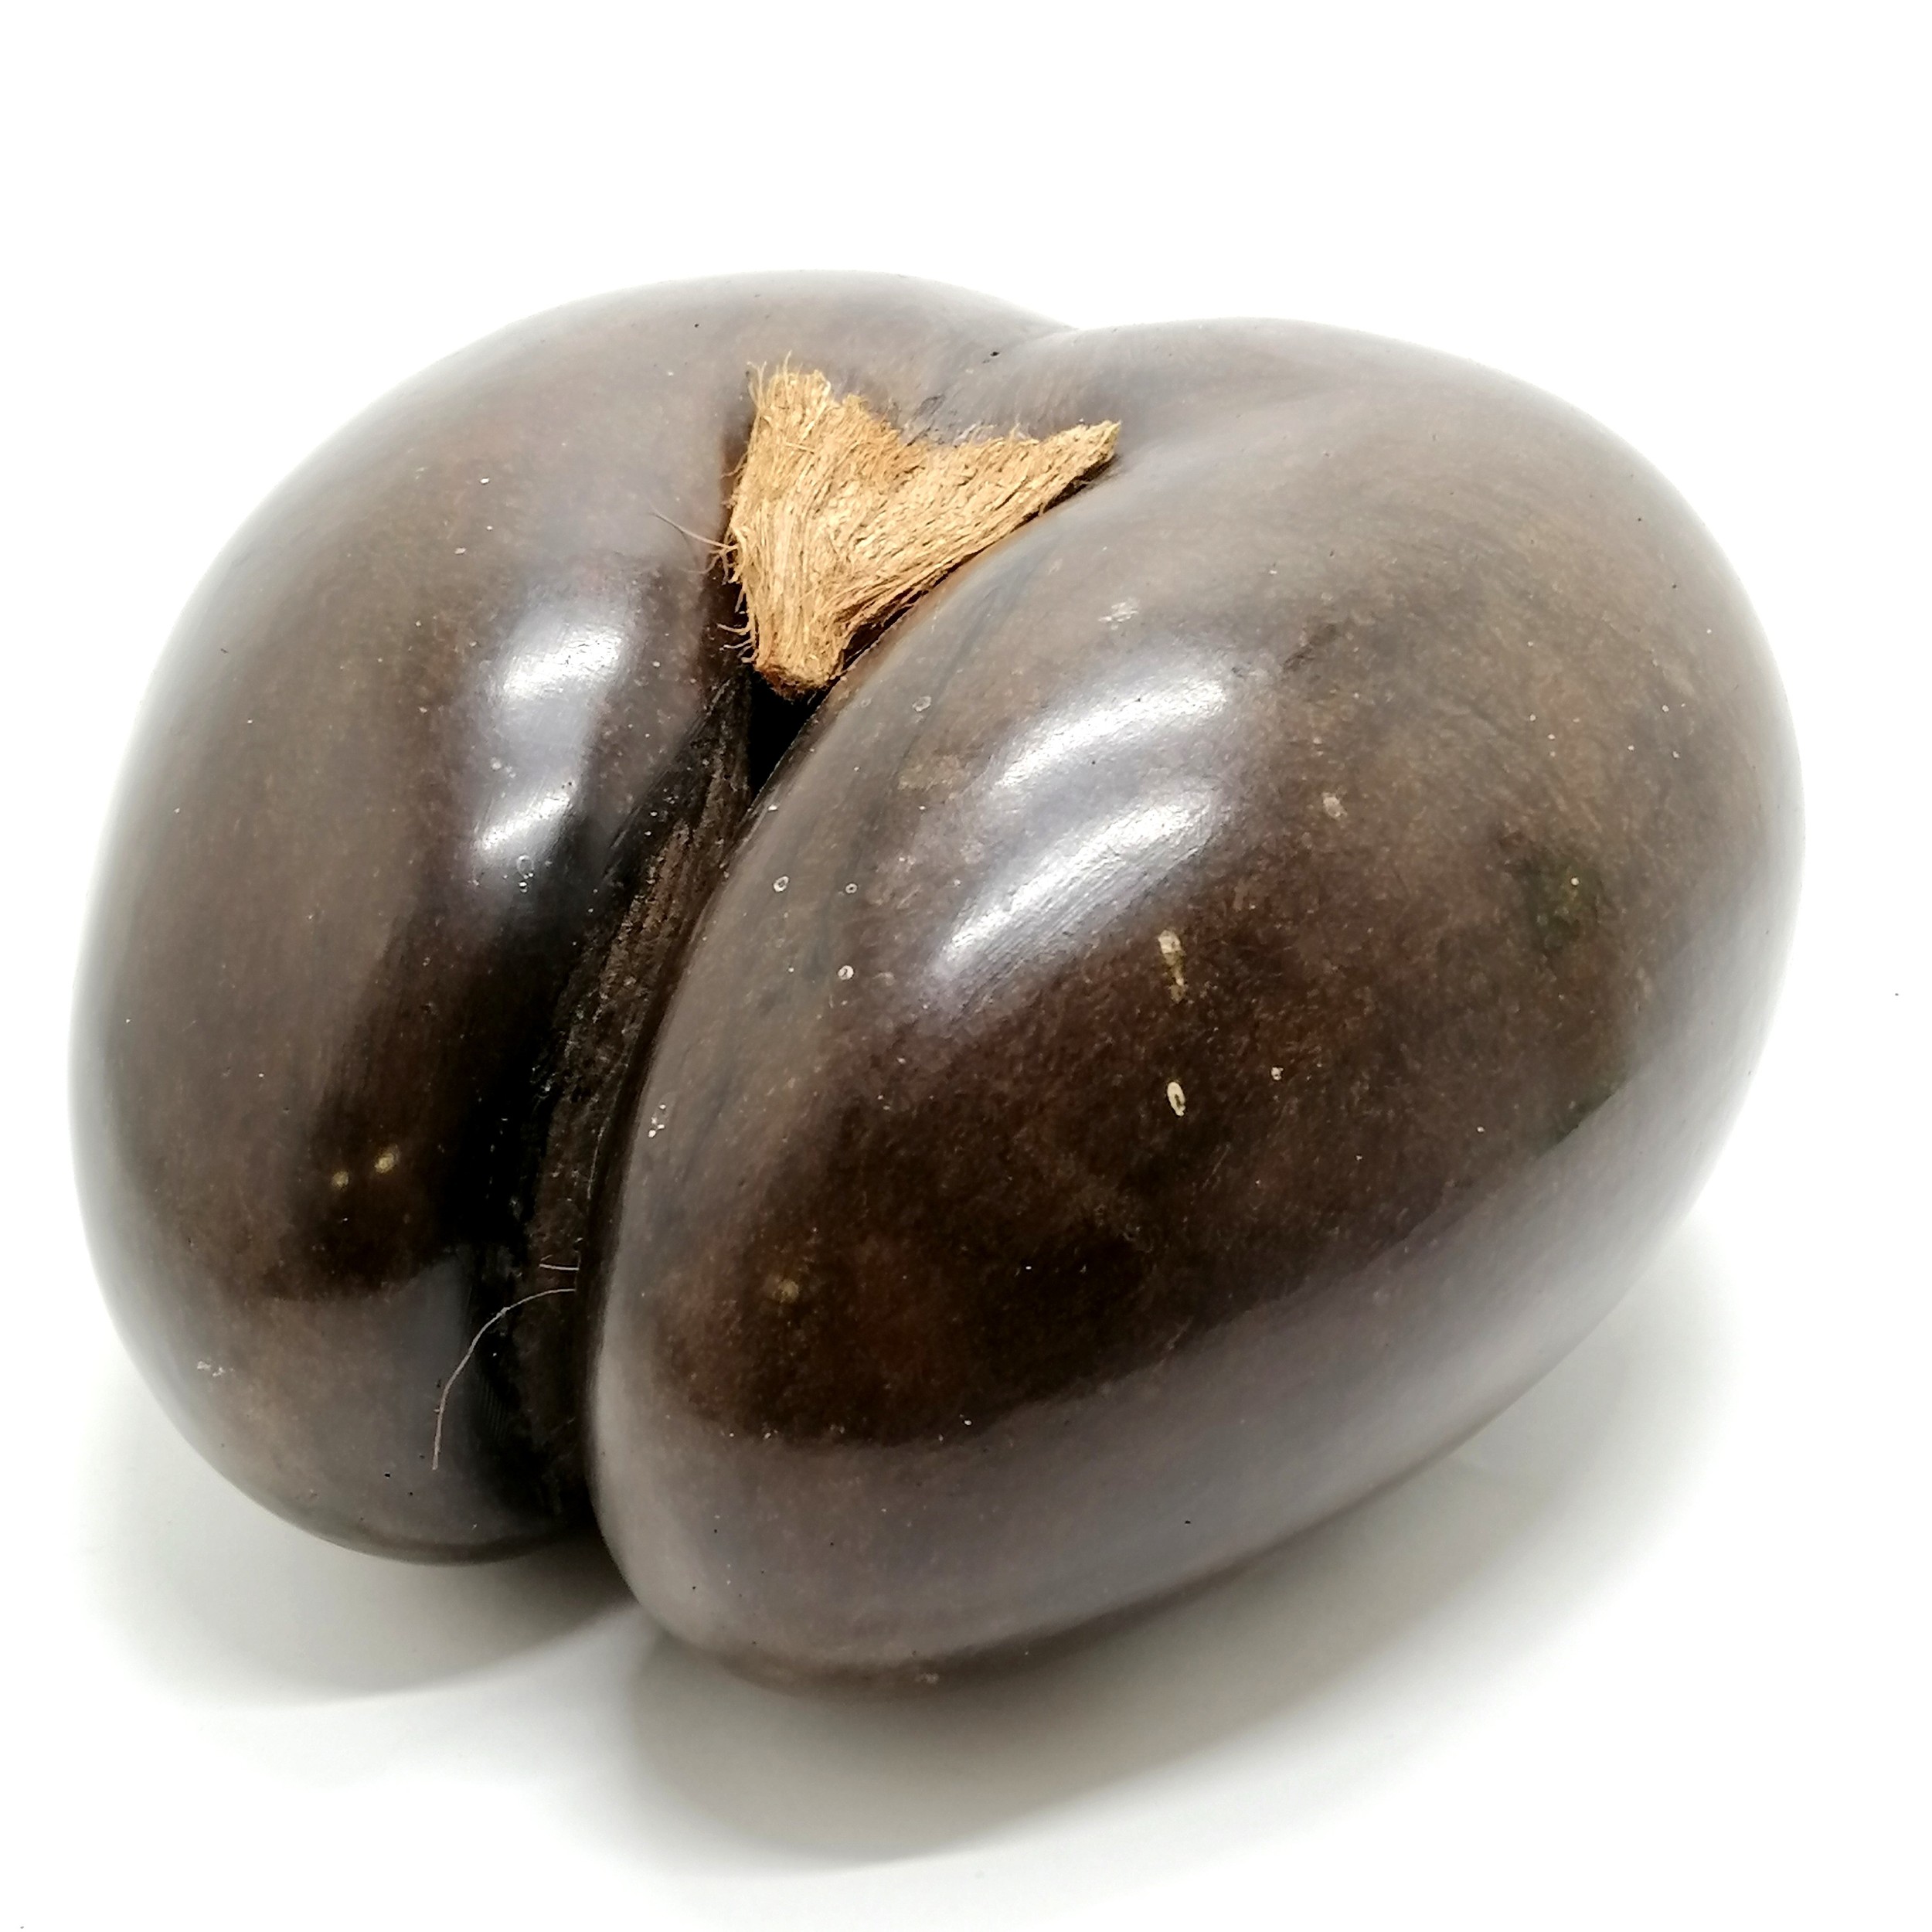 Coco de mer (Lodoicea) nut / seed - 25cm x 26cm & 1.1kg